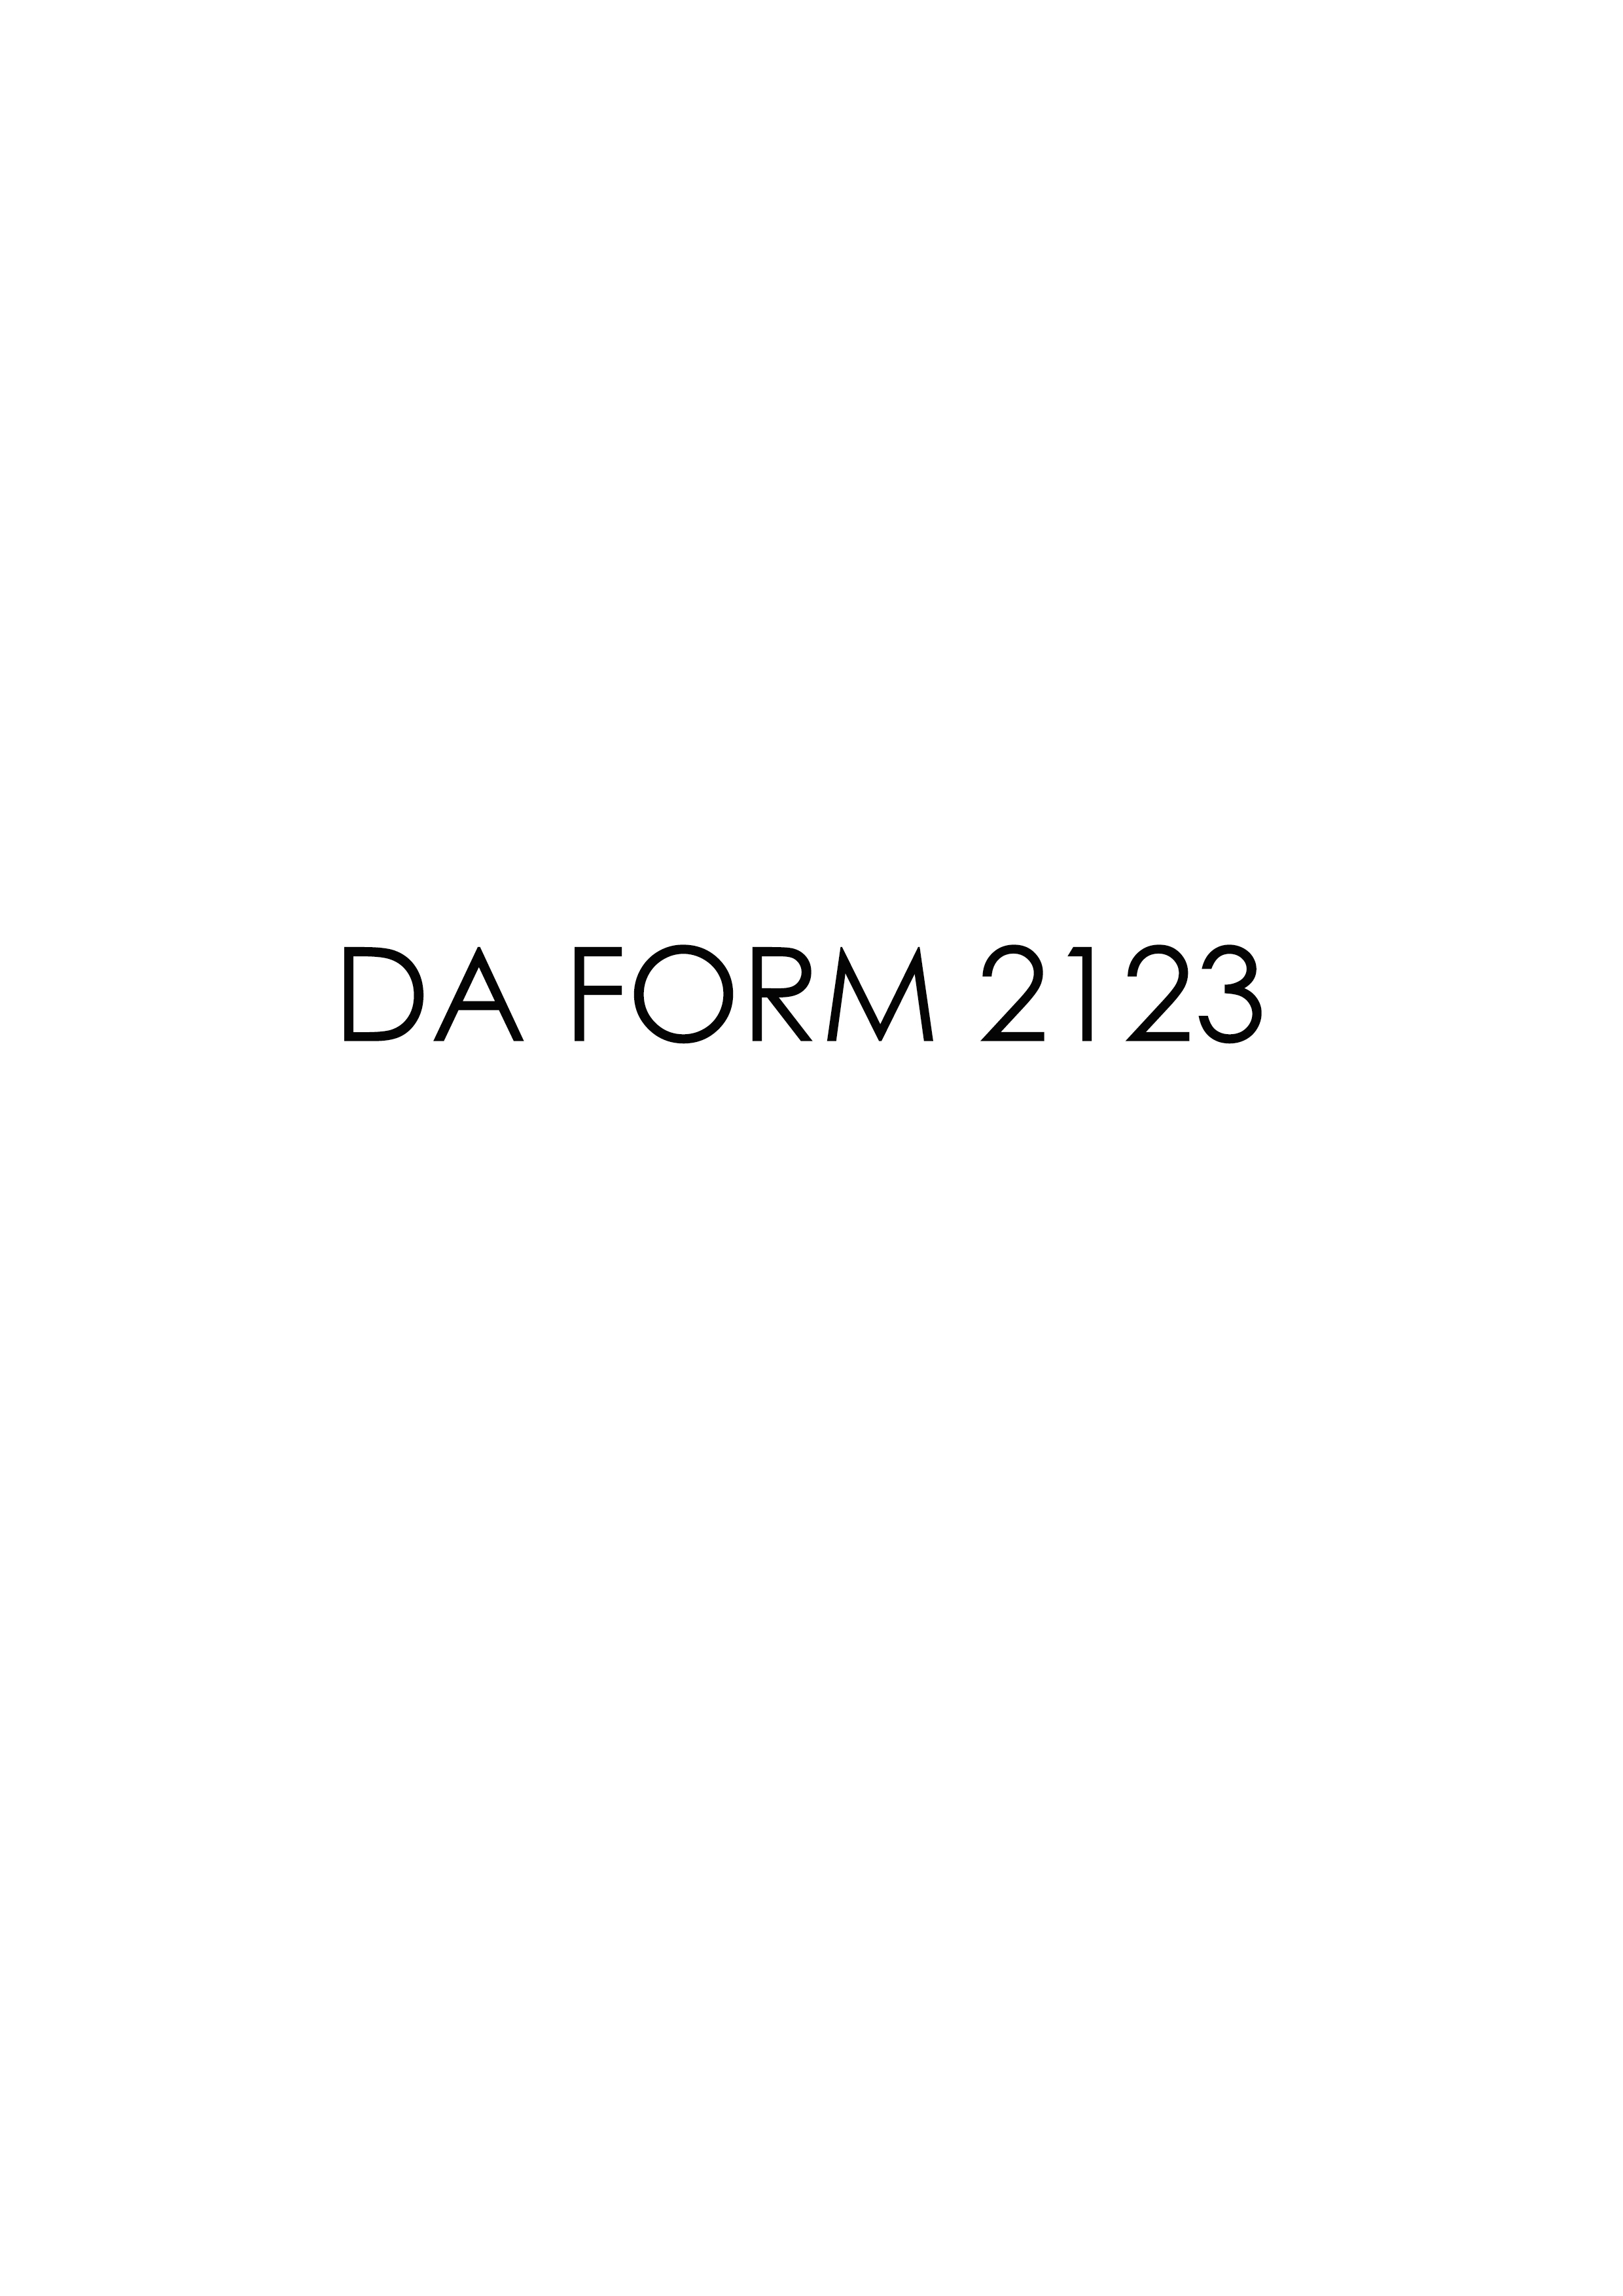 da Form 2123 fillable